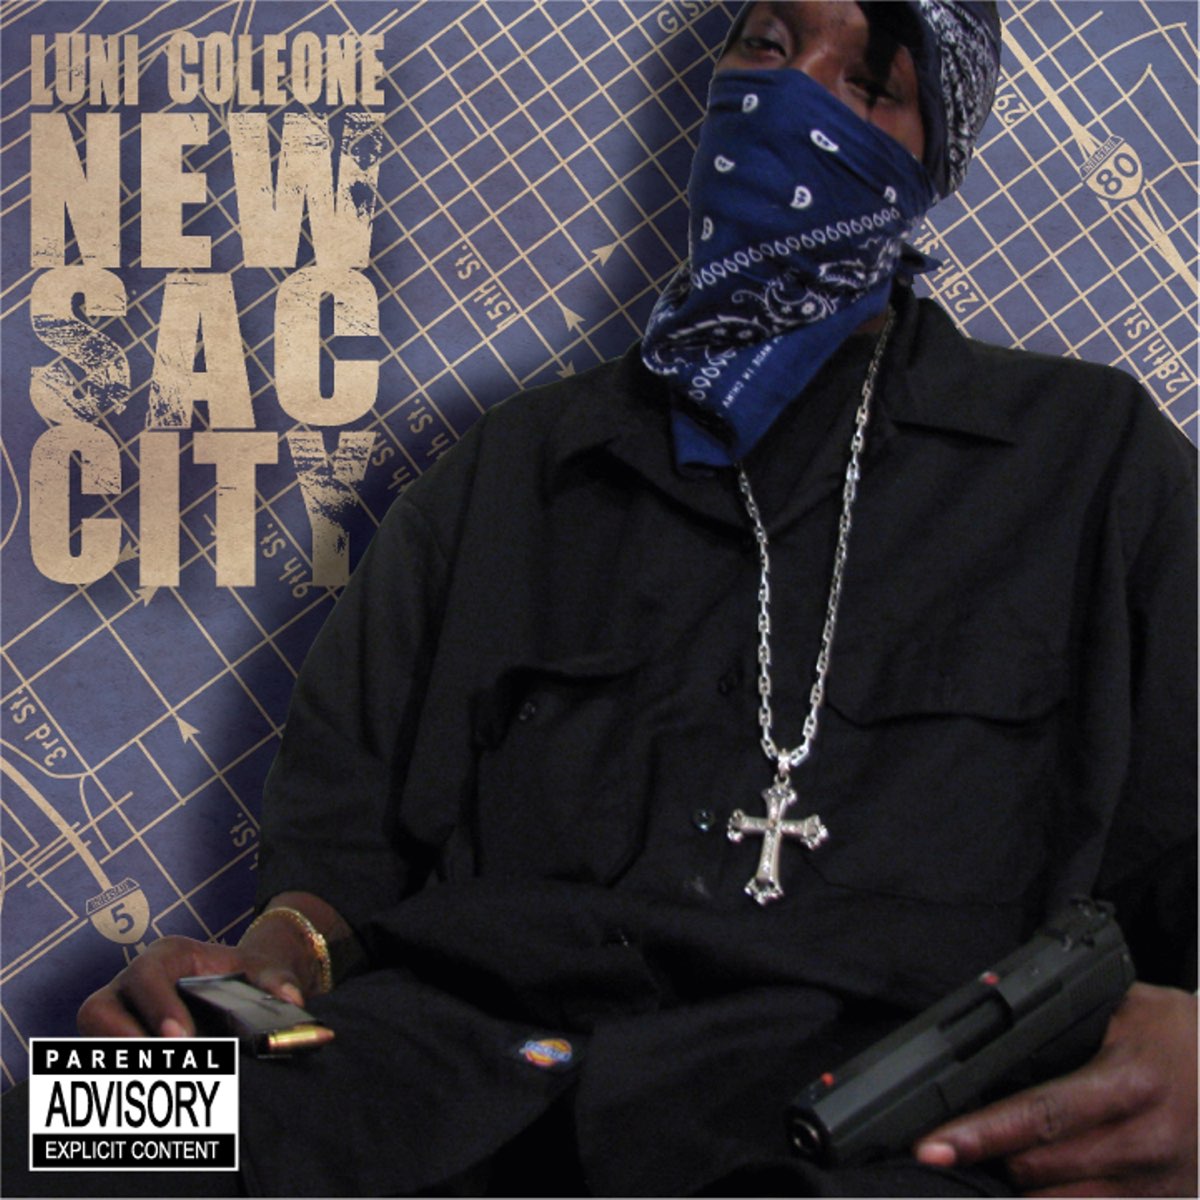 New Sac City - Album by Luni Coleone - Apple Music